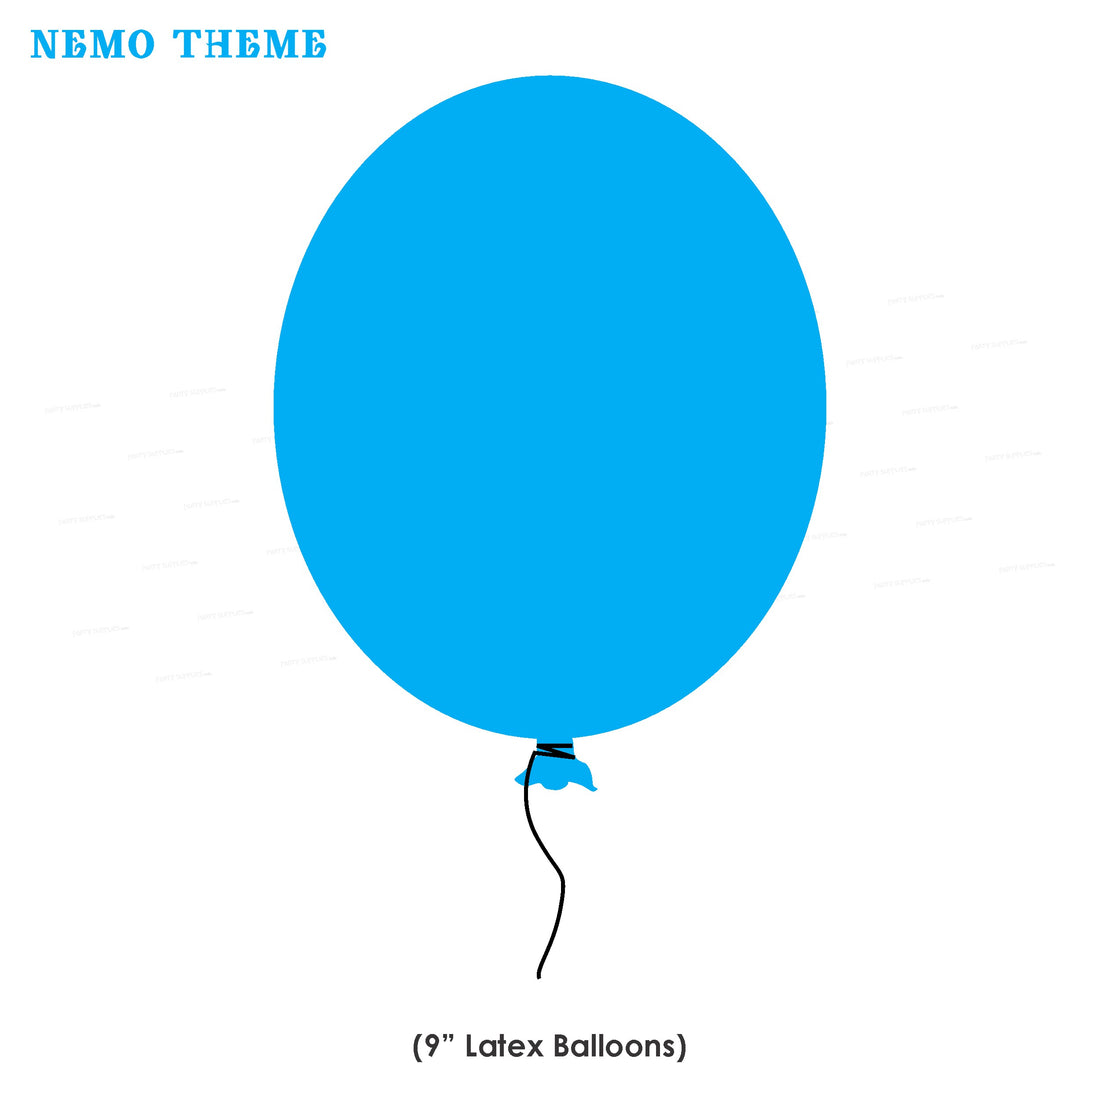 PSI Nemo and Dory Theme Colour 30 Pcs. Balloons